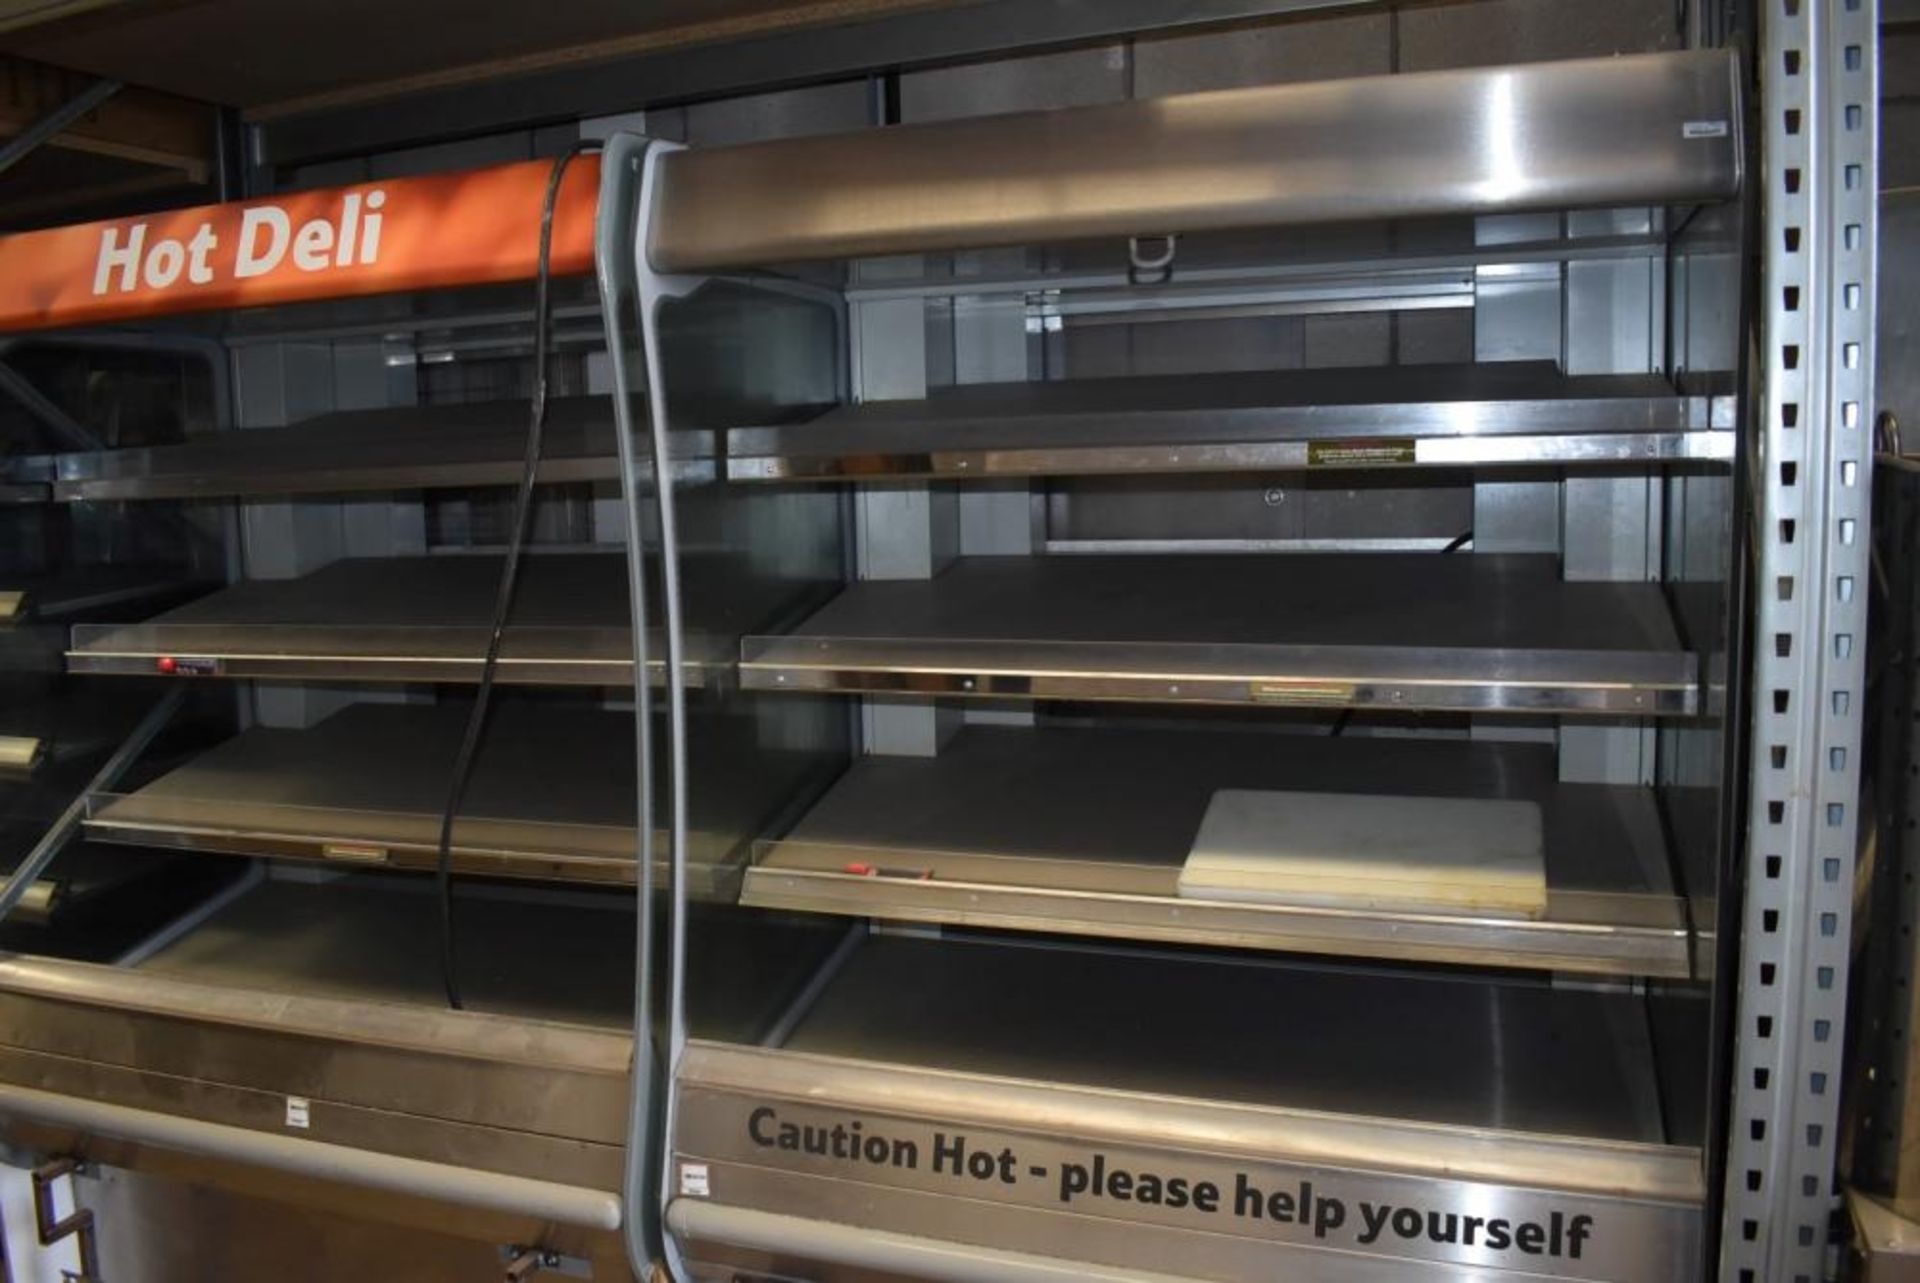 2 x Multi Deck Hot Food Warmer Heated Display Units Hot Food Deli Self Serve Displays - Features Gla - Image 2 of 4